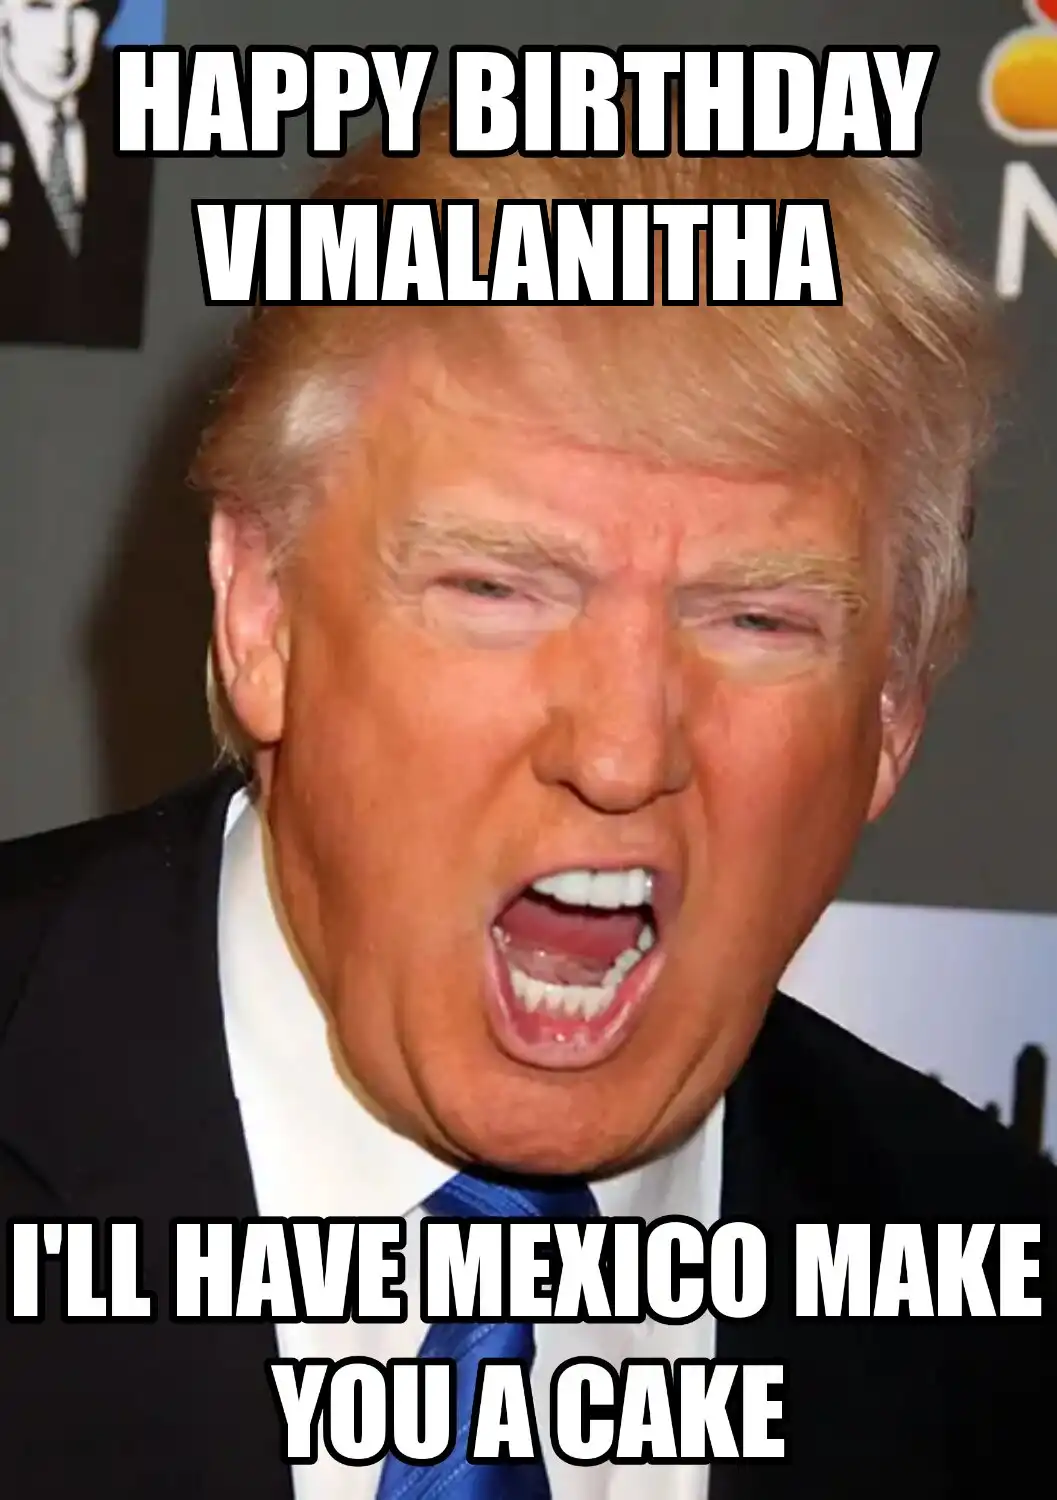 Happy Birthday Vimalanitha Mexico Make You A Cake Meme